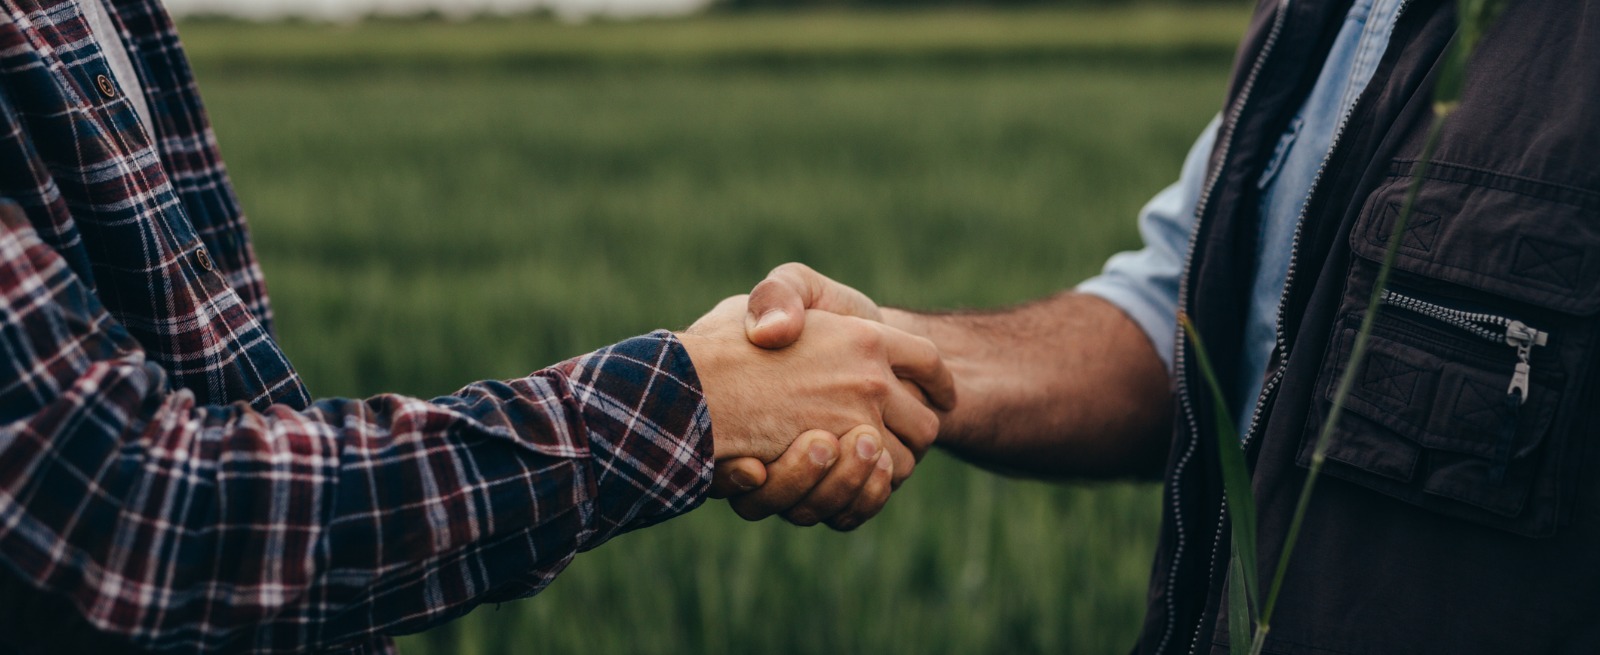 Two farmers in a field shaking hands